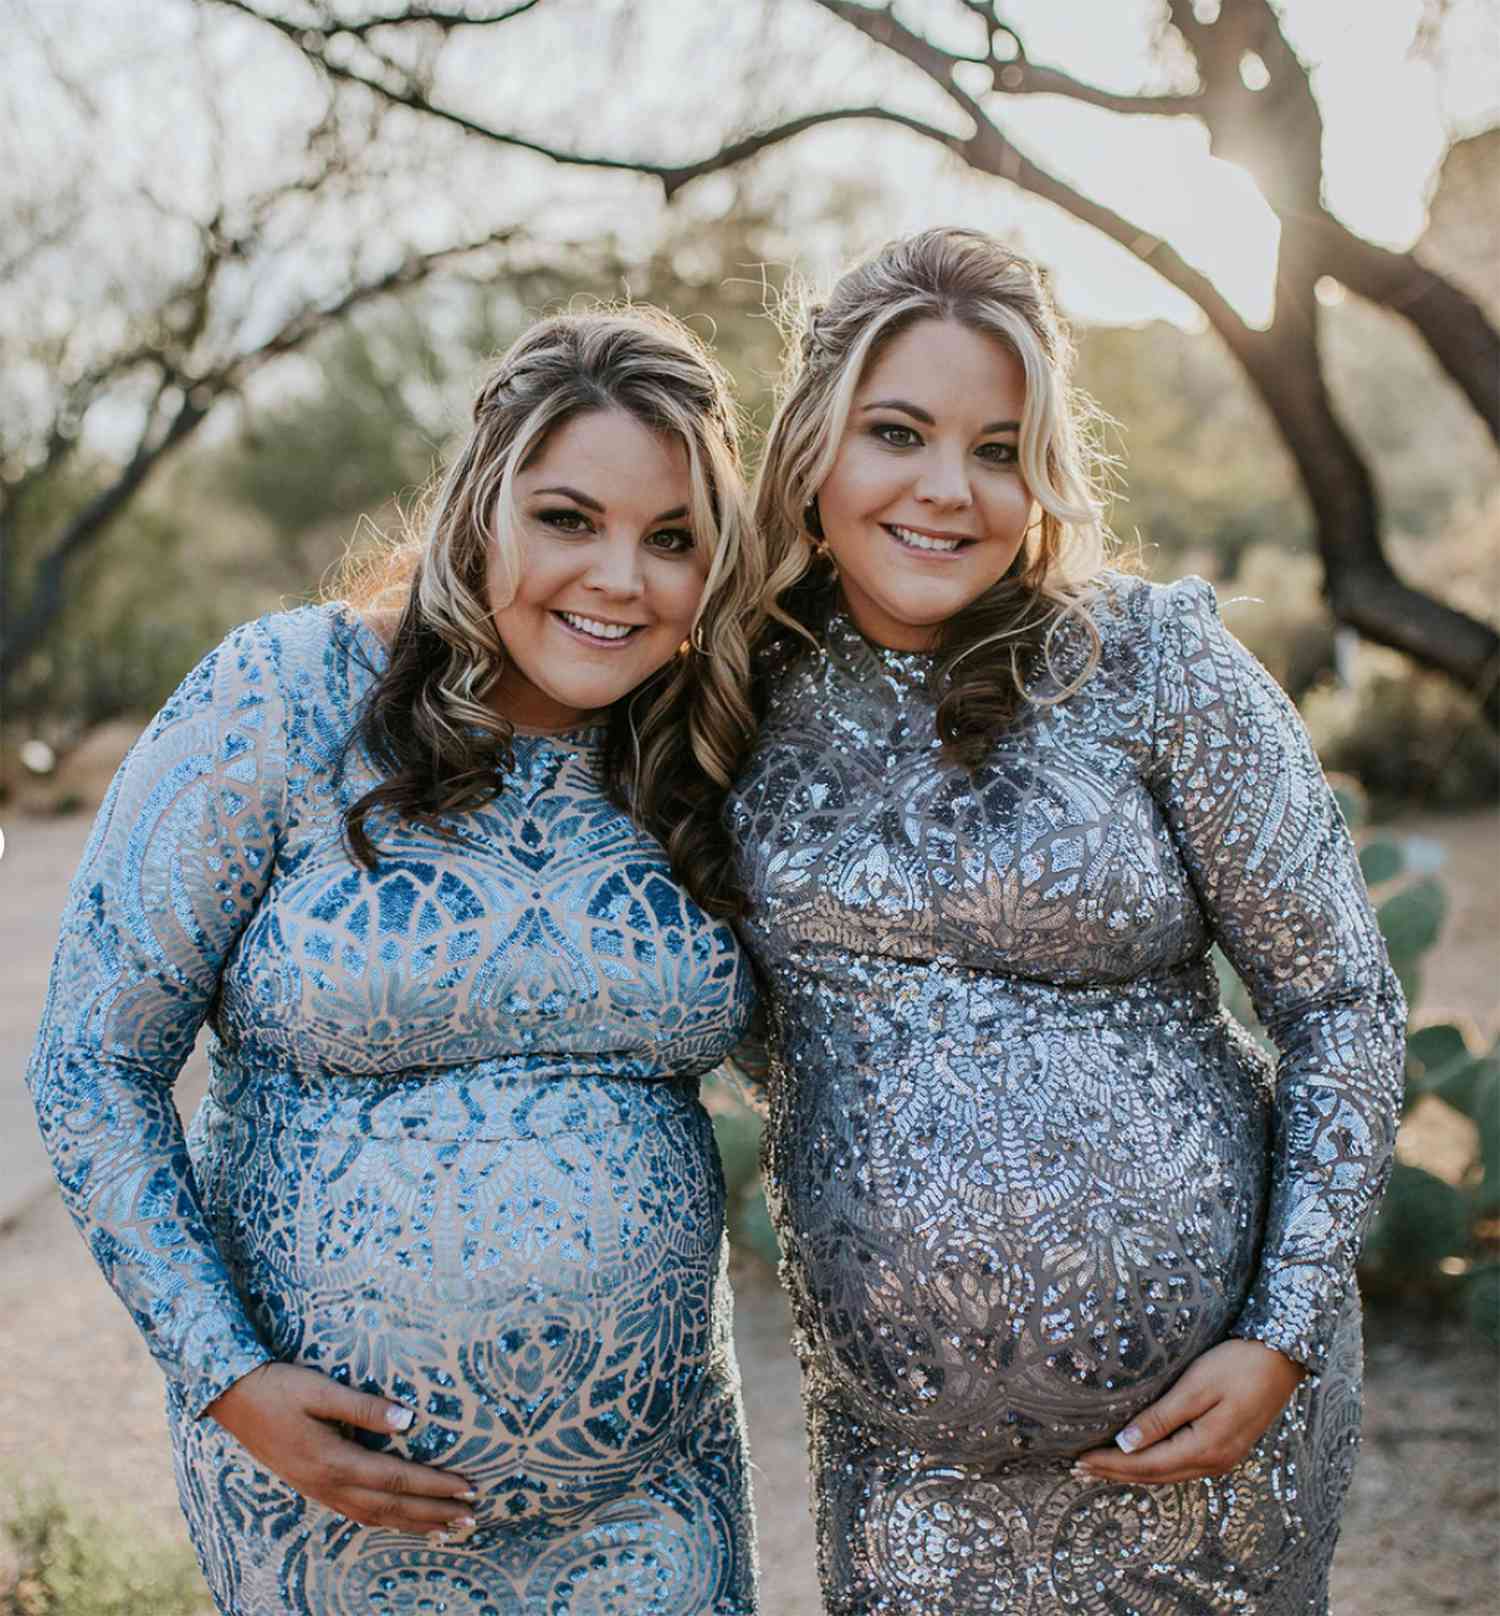 Twins give birth the same dayCredit: Liz Valentine Photography